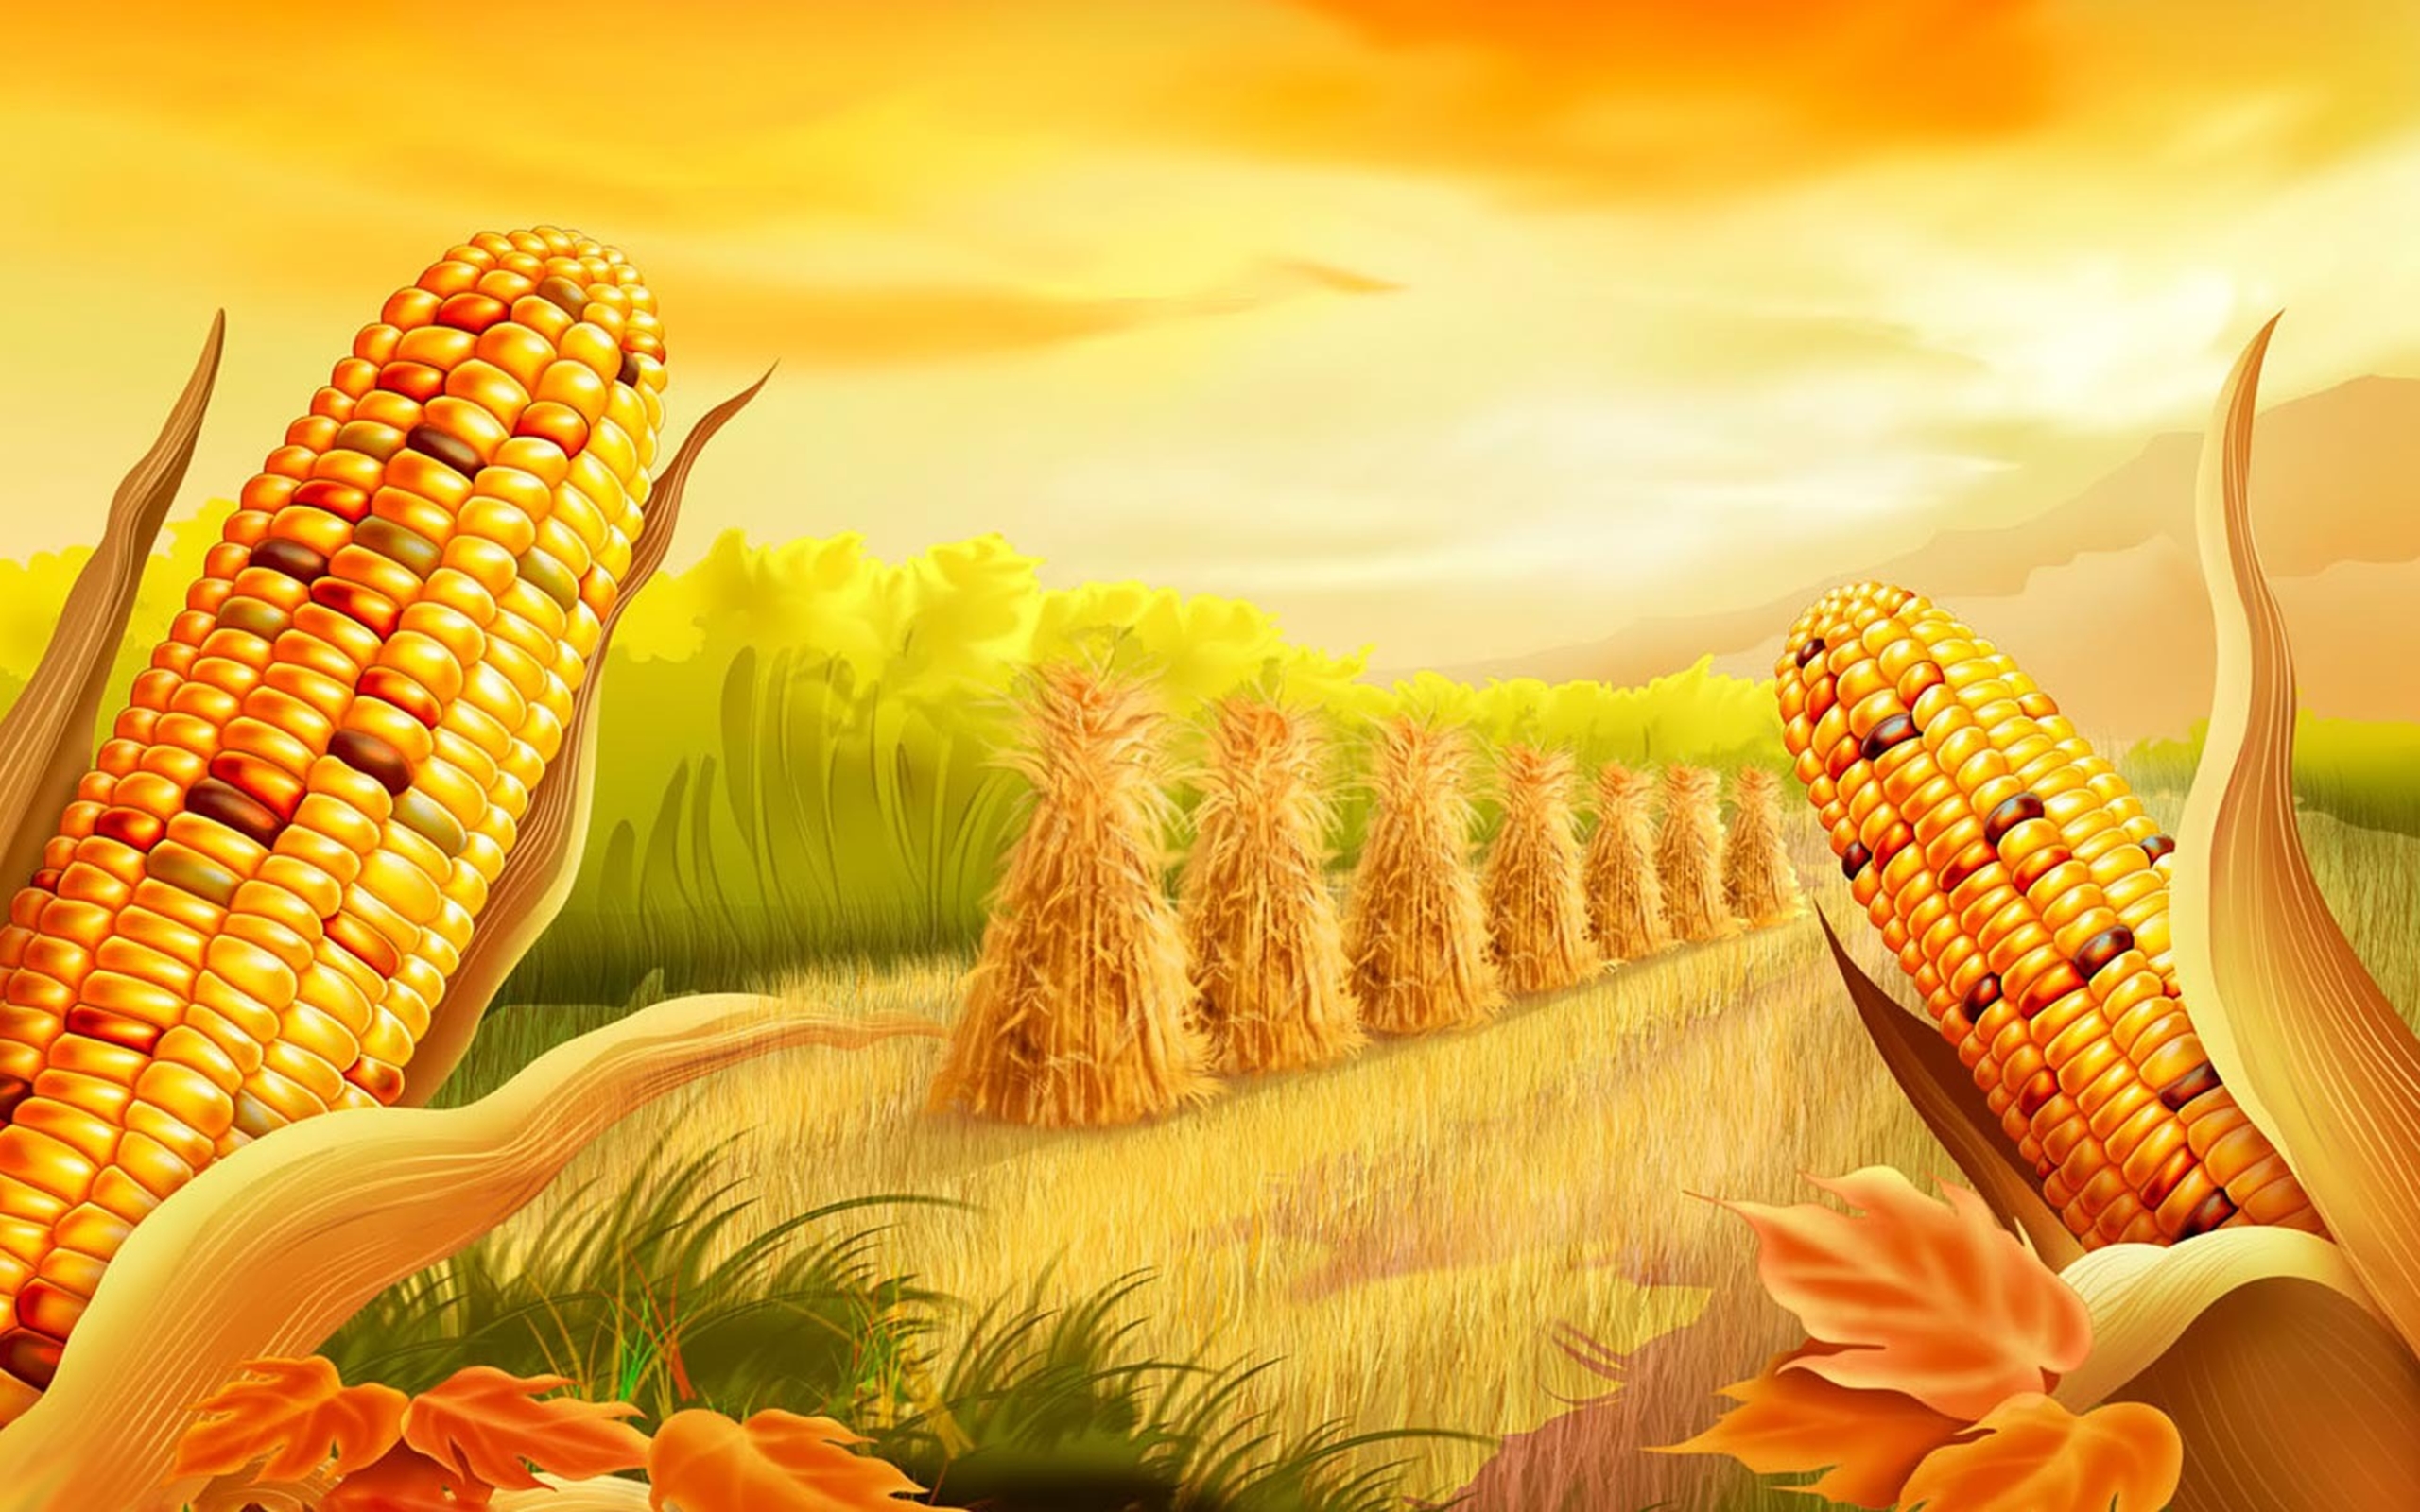 Corn Field Sunset 4K wallpaper download